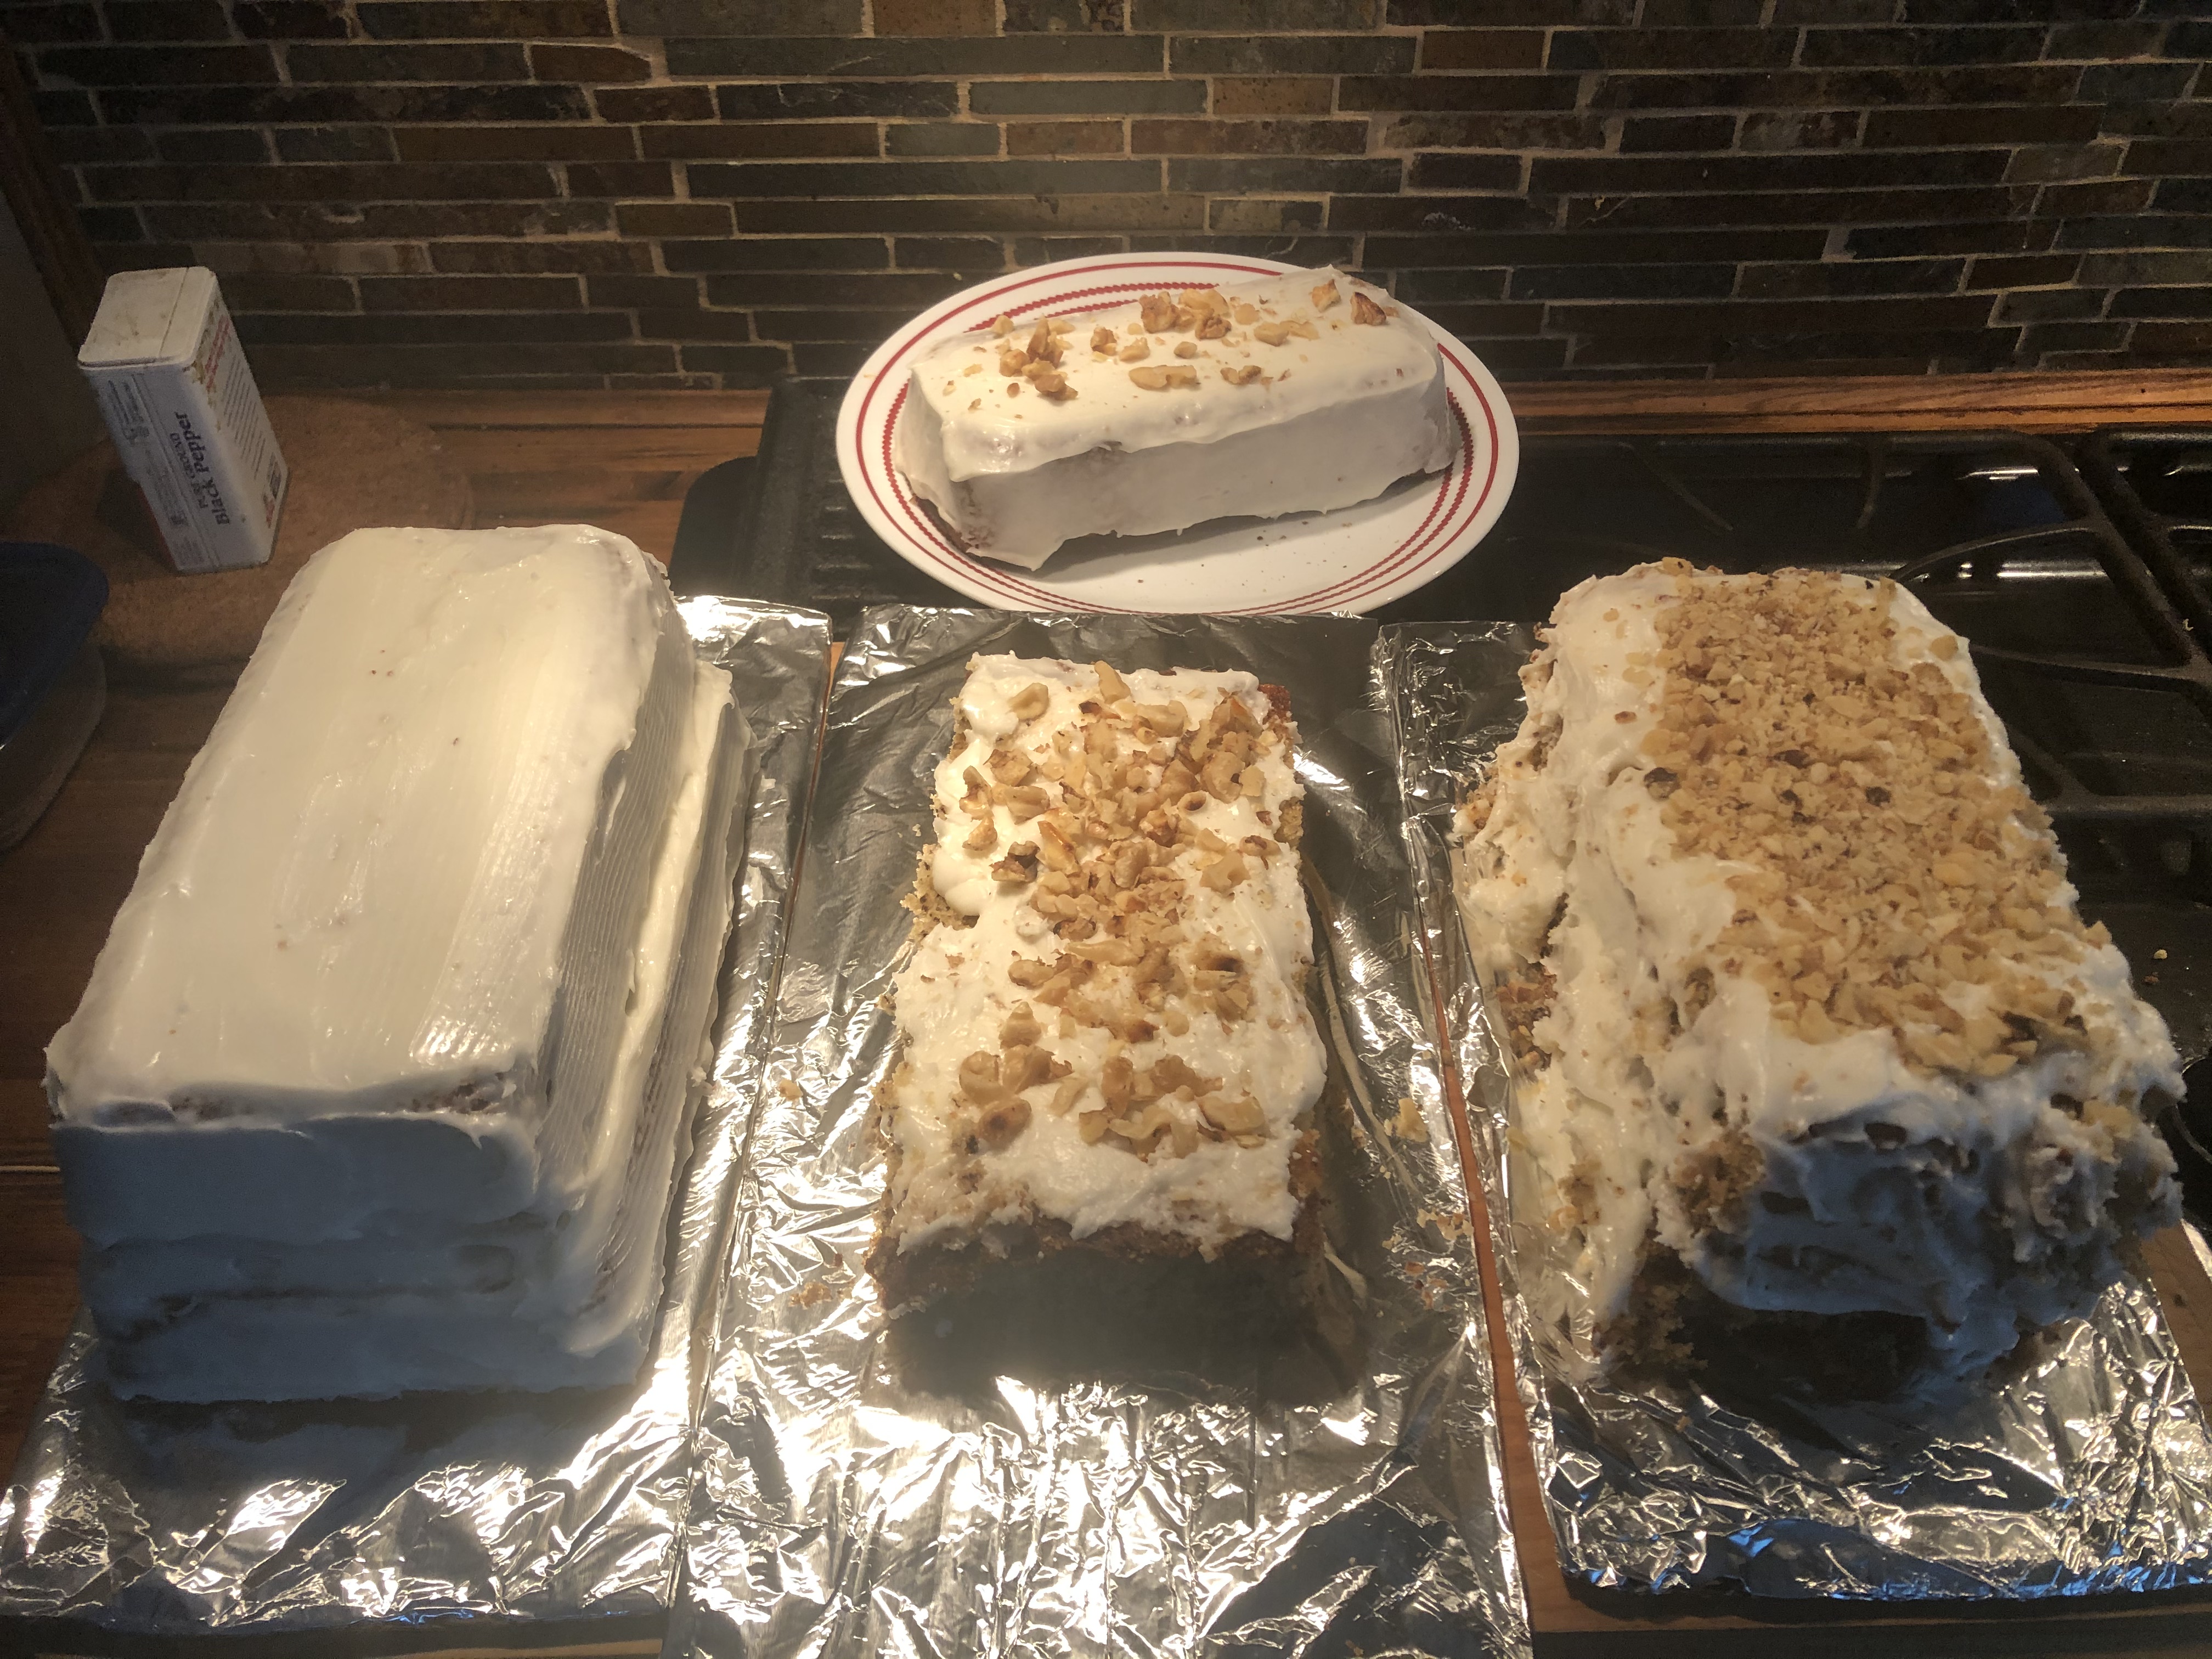 Three spice cake layers